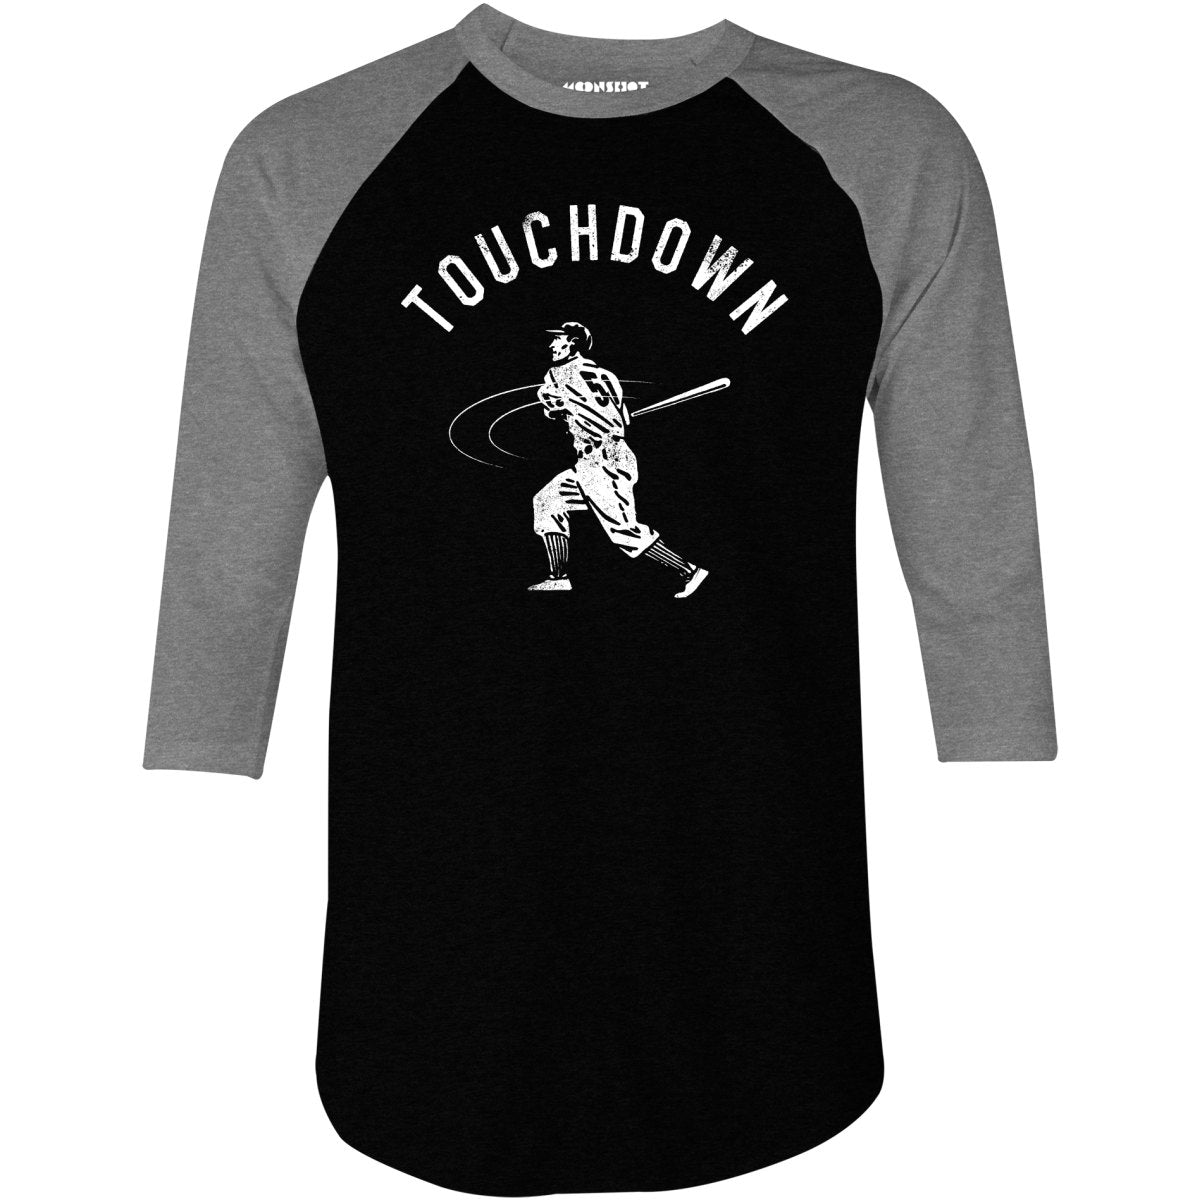 Touchdown - 3/4 Sleeve Raglan T-Shirt